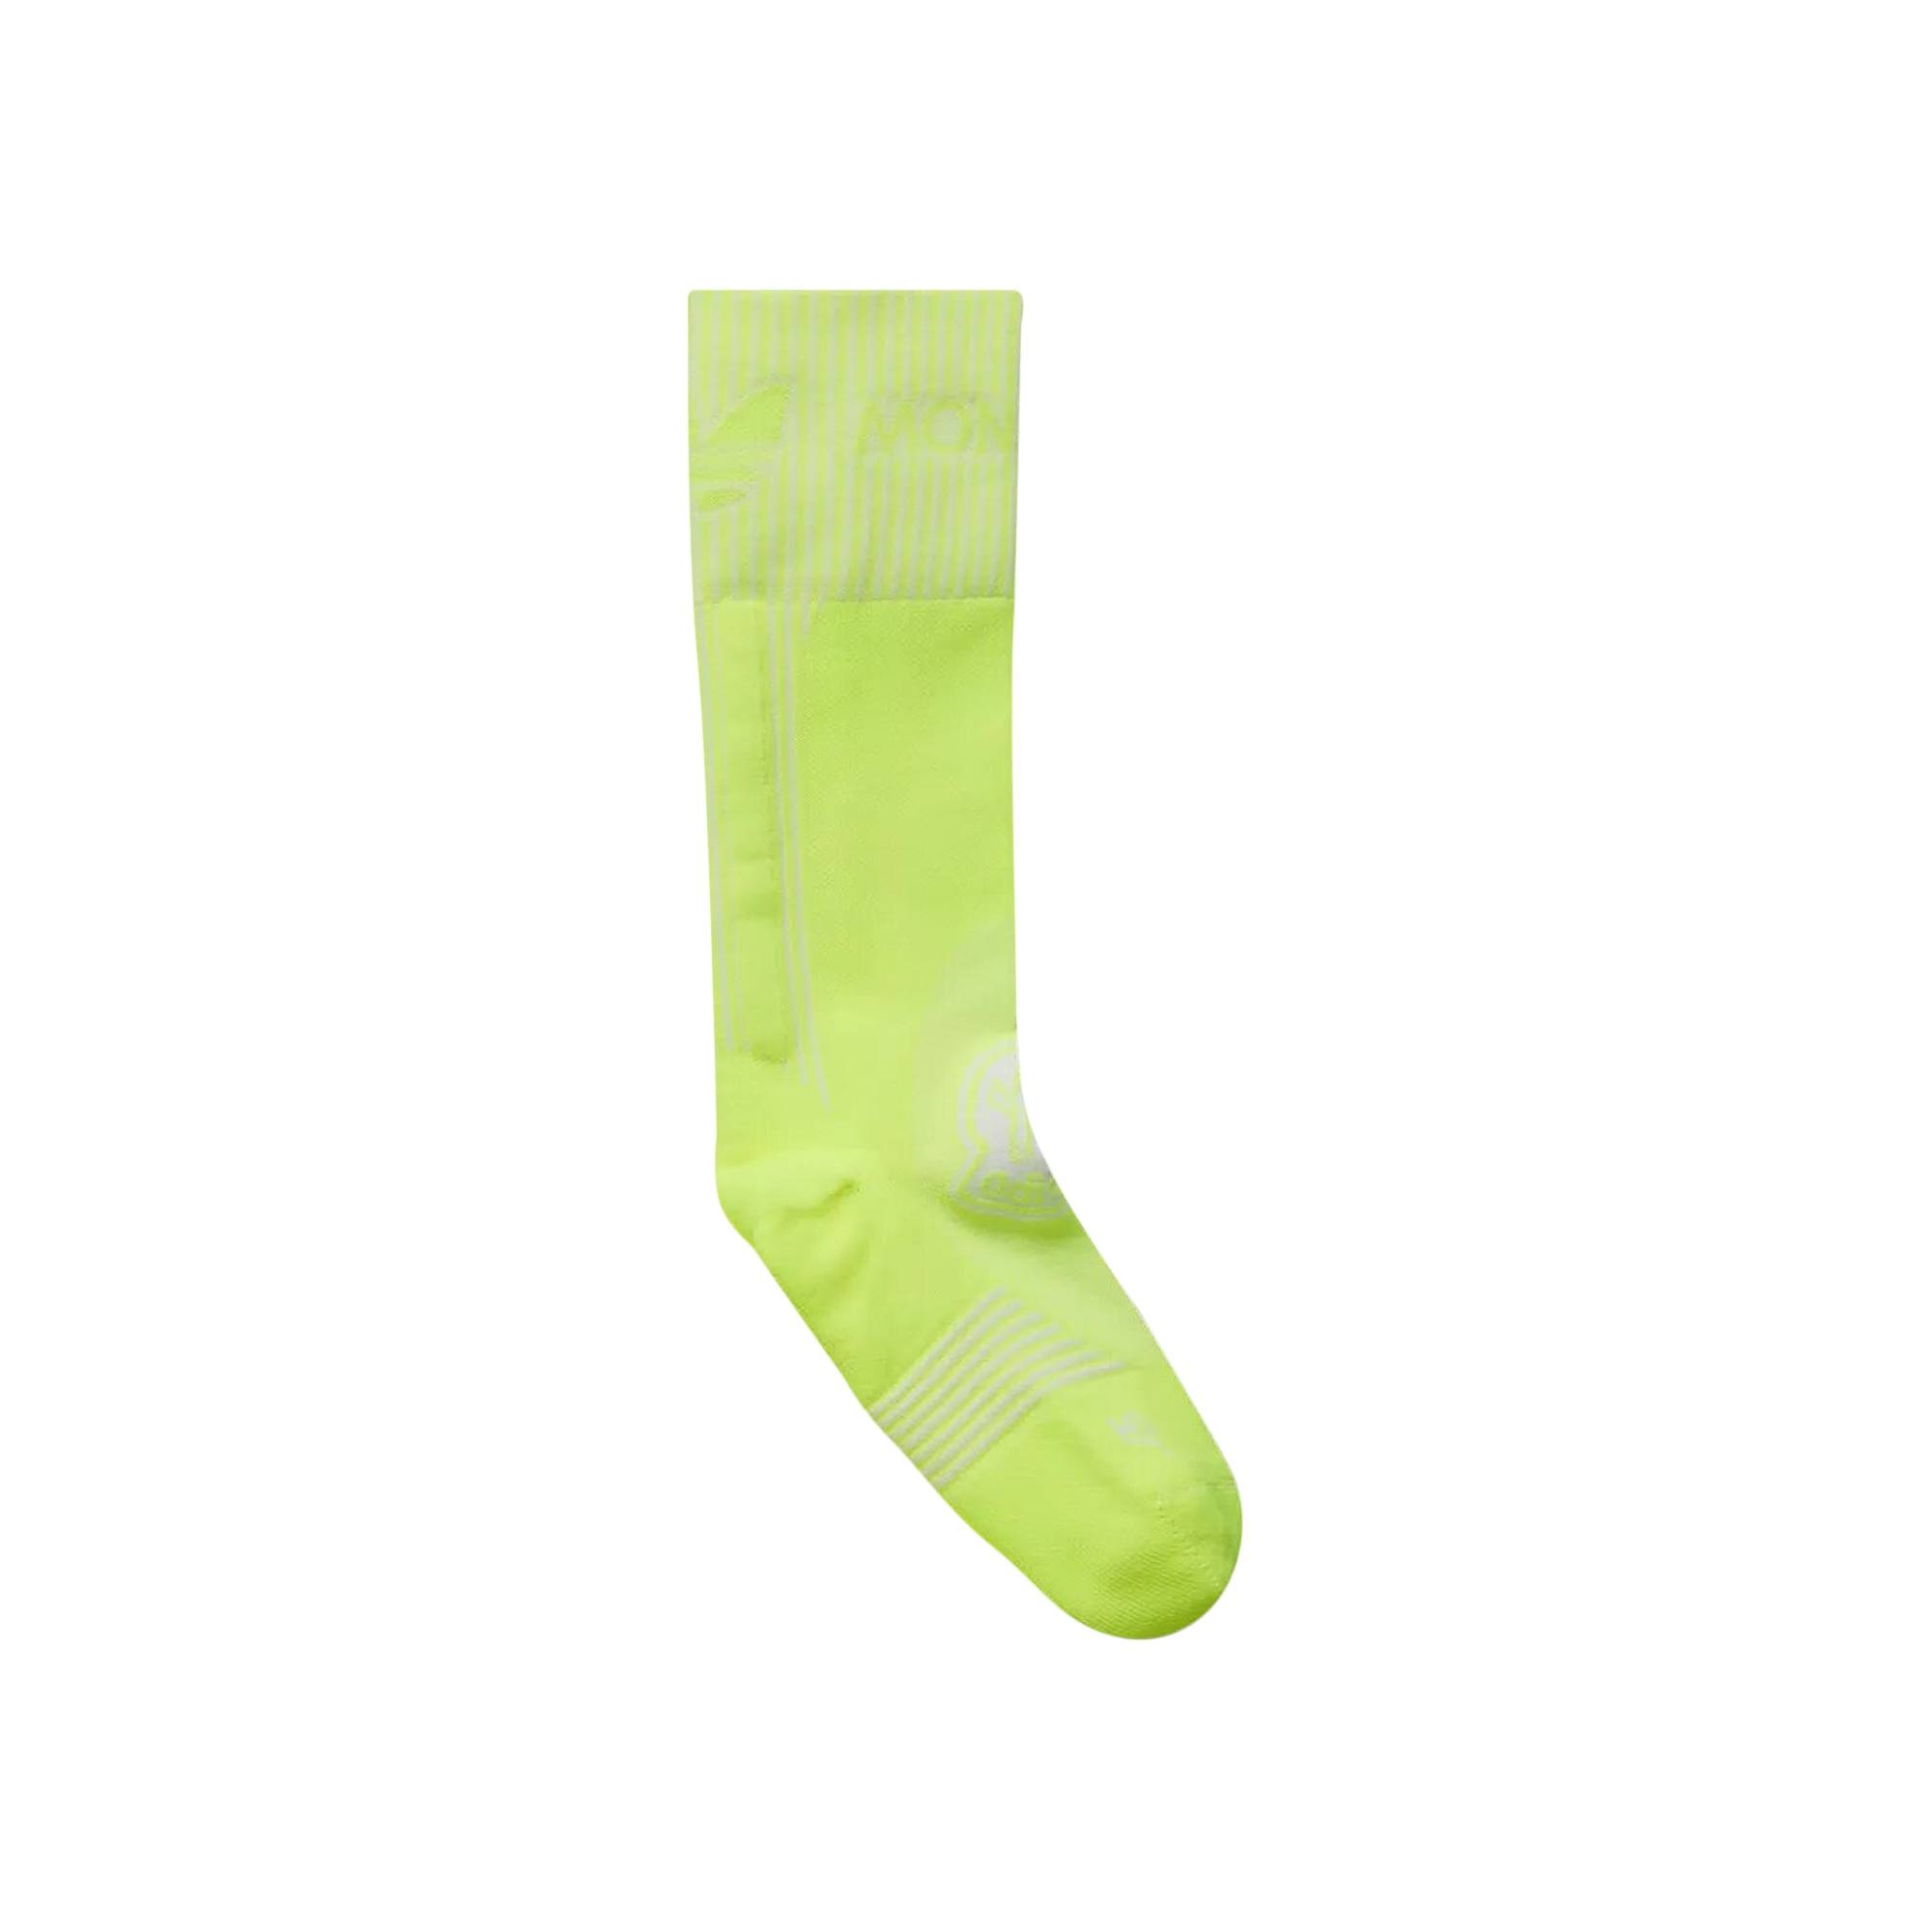 Moncler x adidas Logo Socks 'Lime Green' - 1